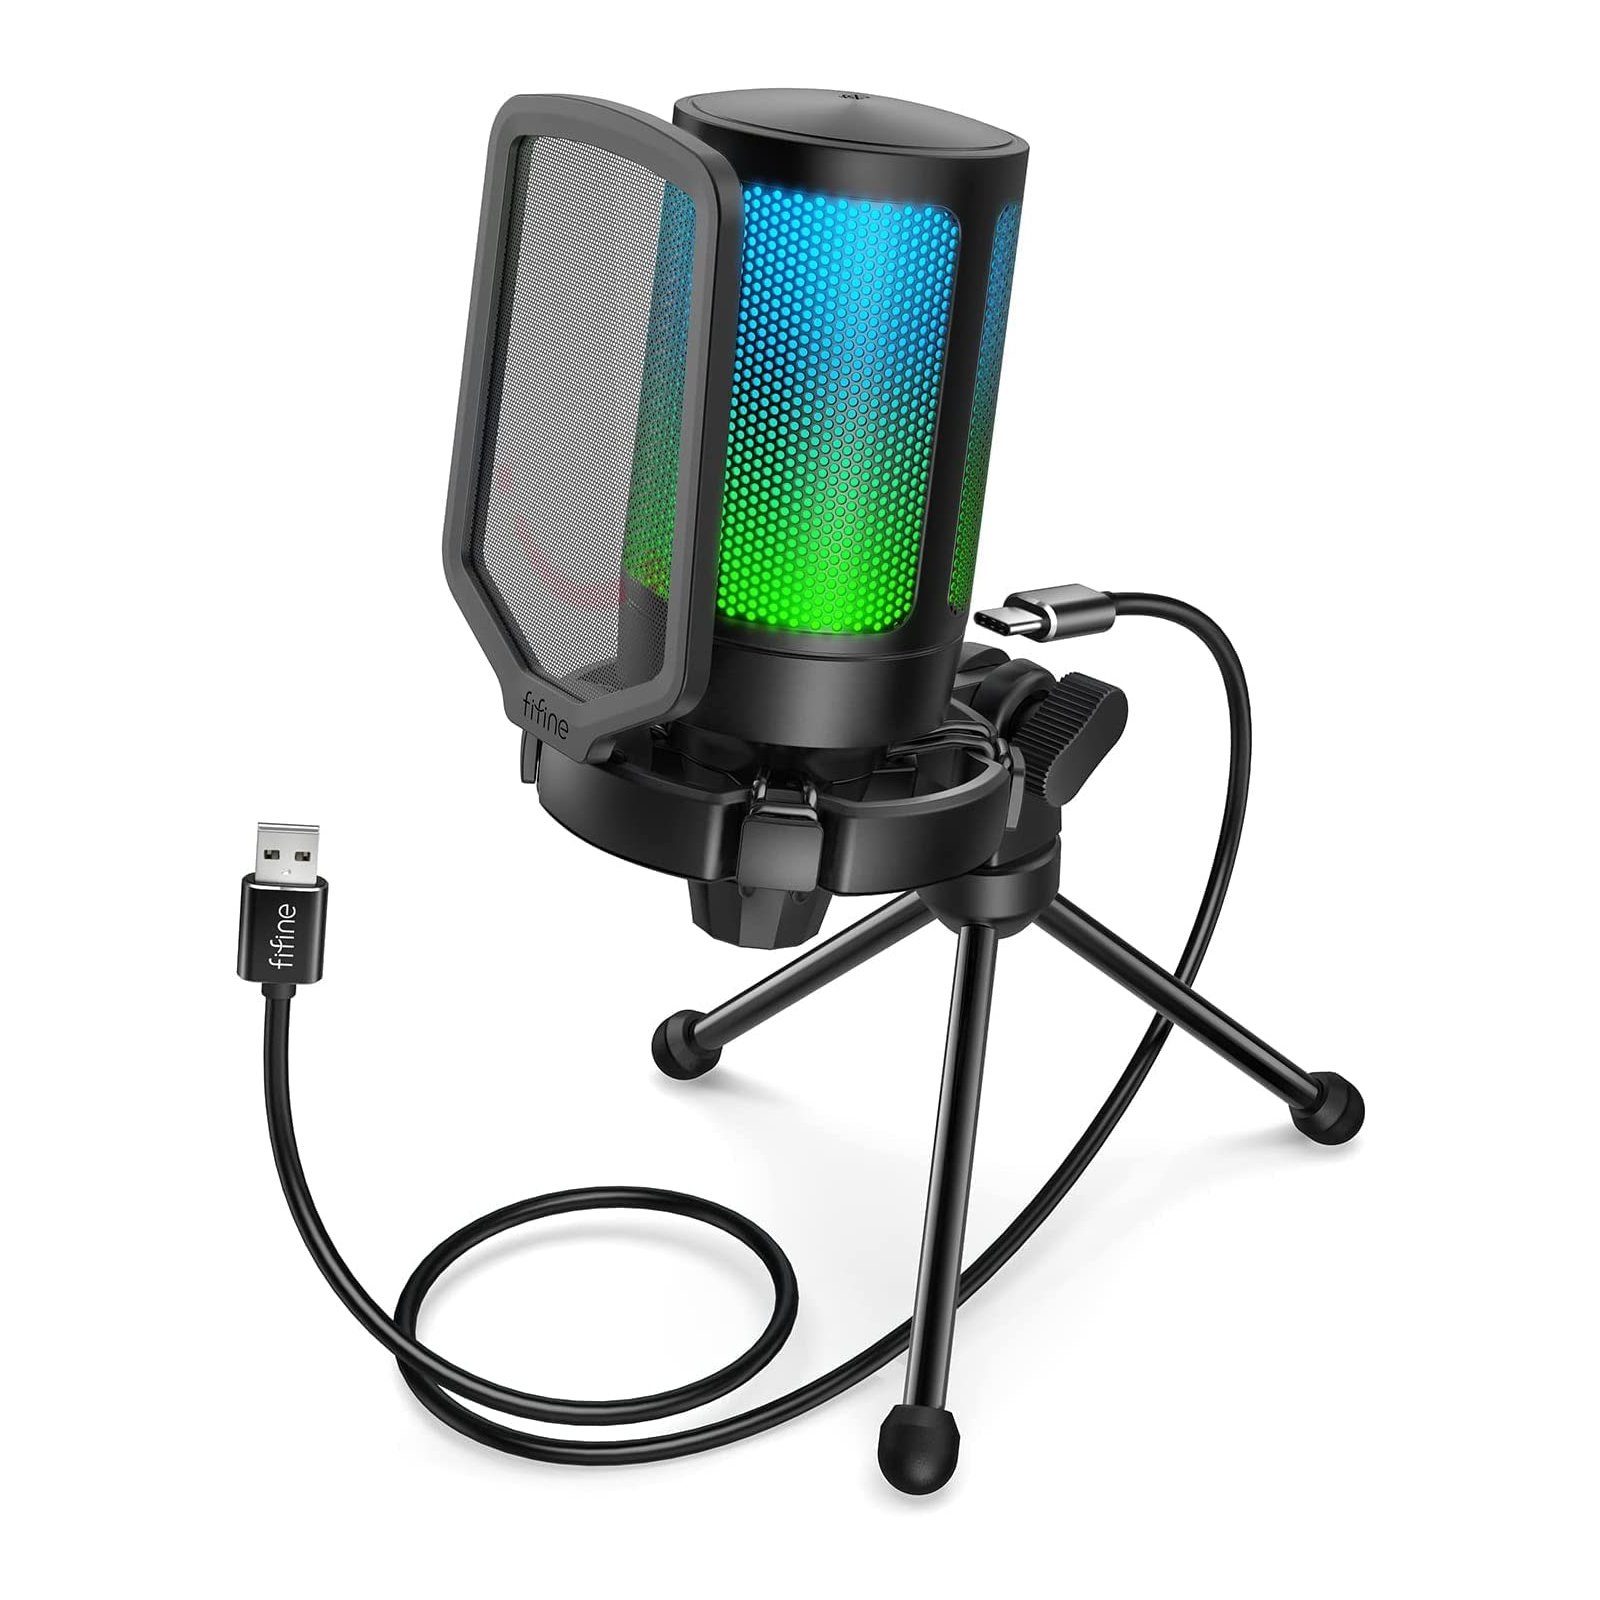 FIFINE Mikrofon USB Mikrofon Streaming RGB Kondensator Mikrofon Gaming